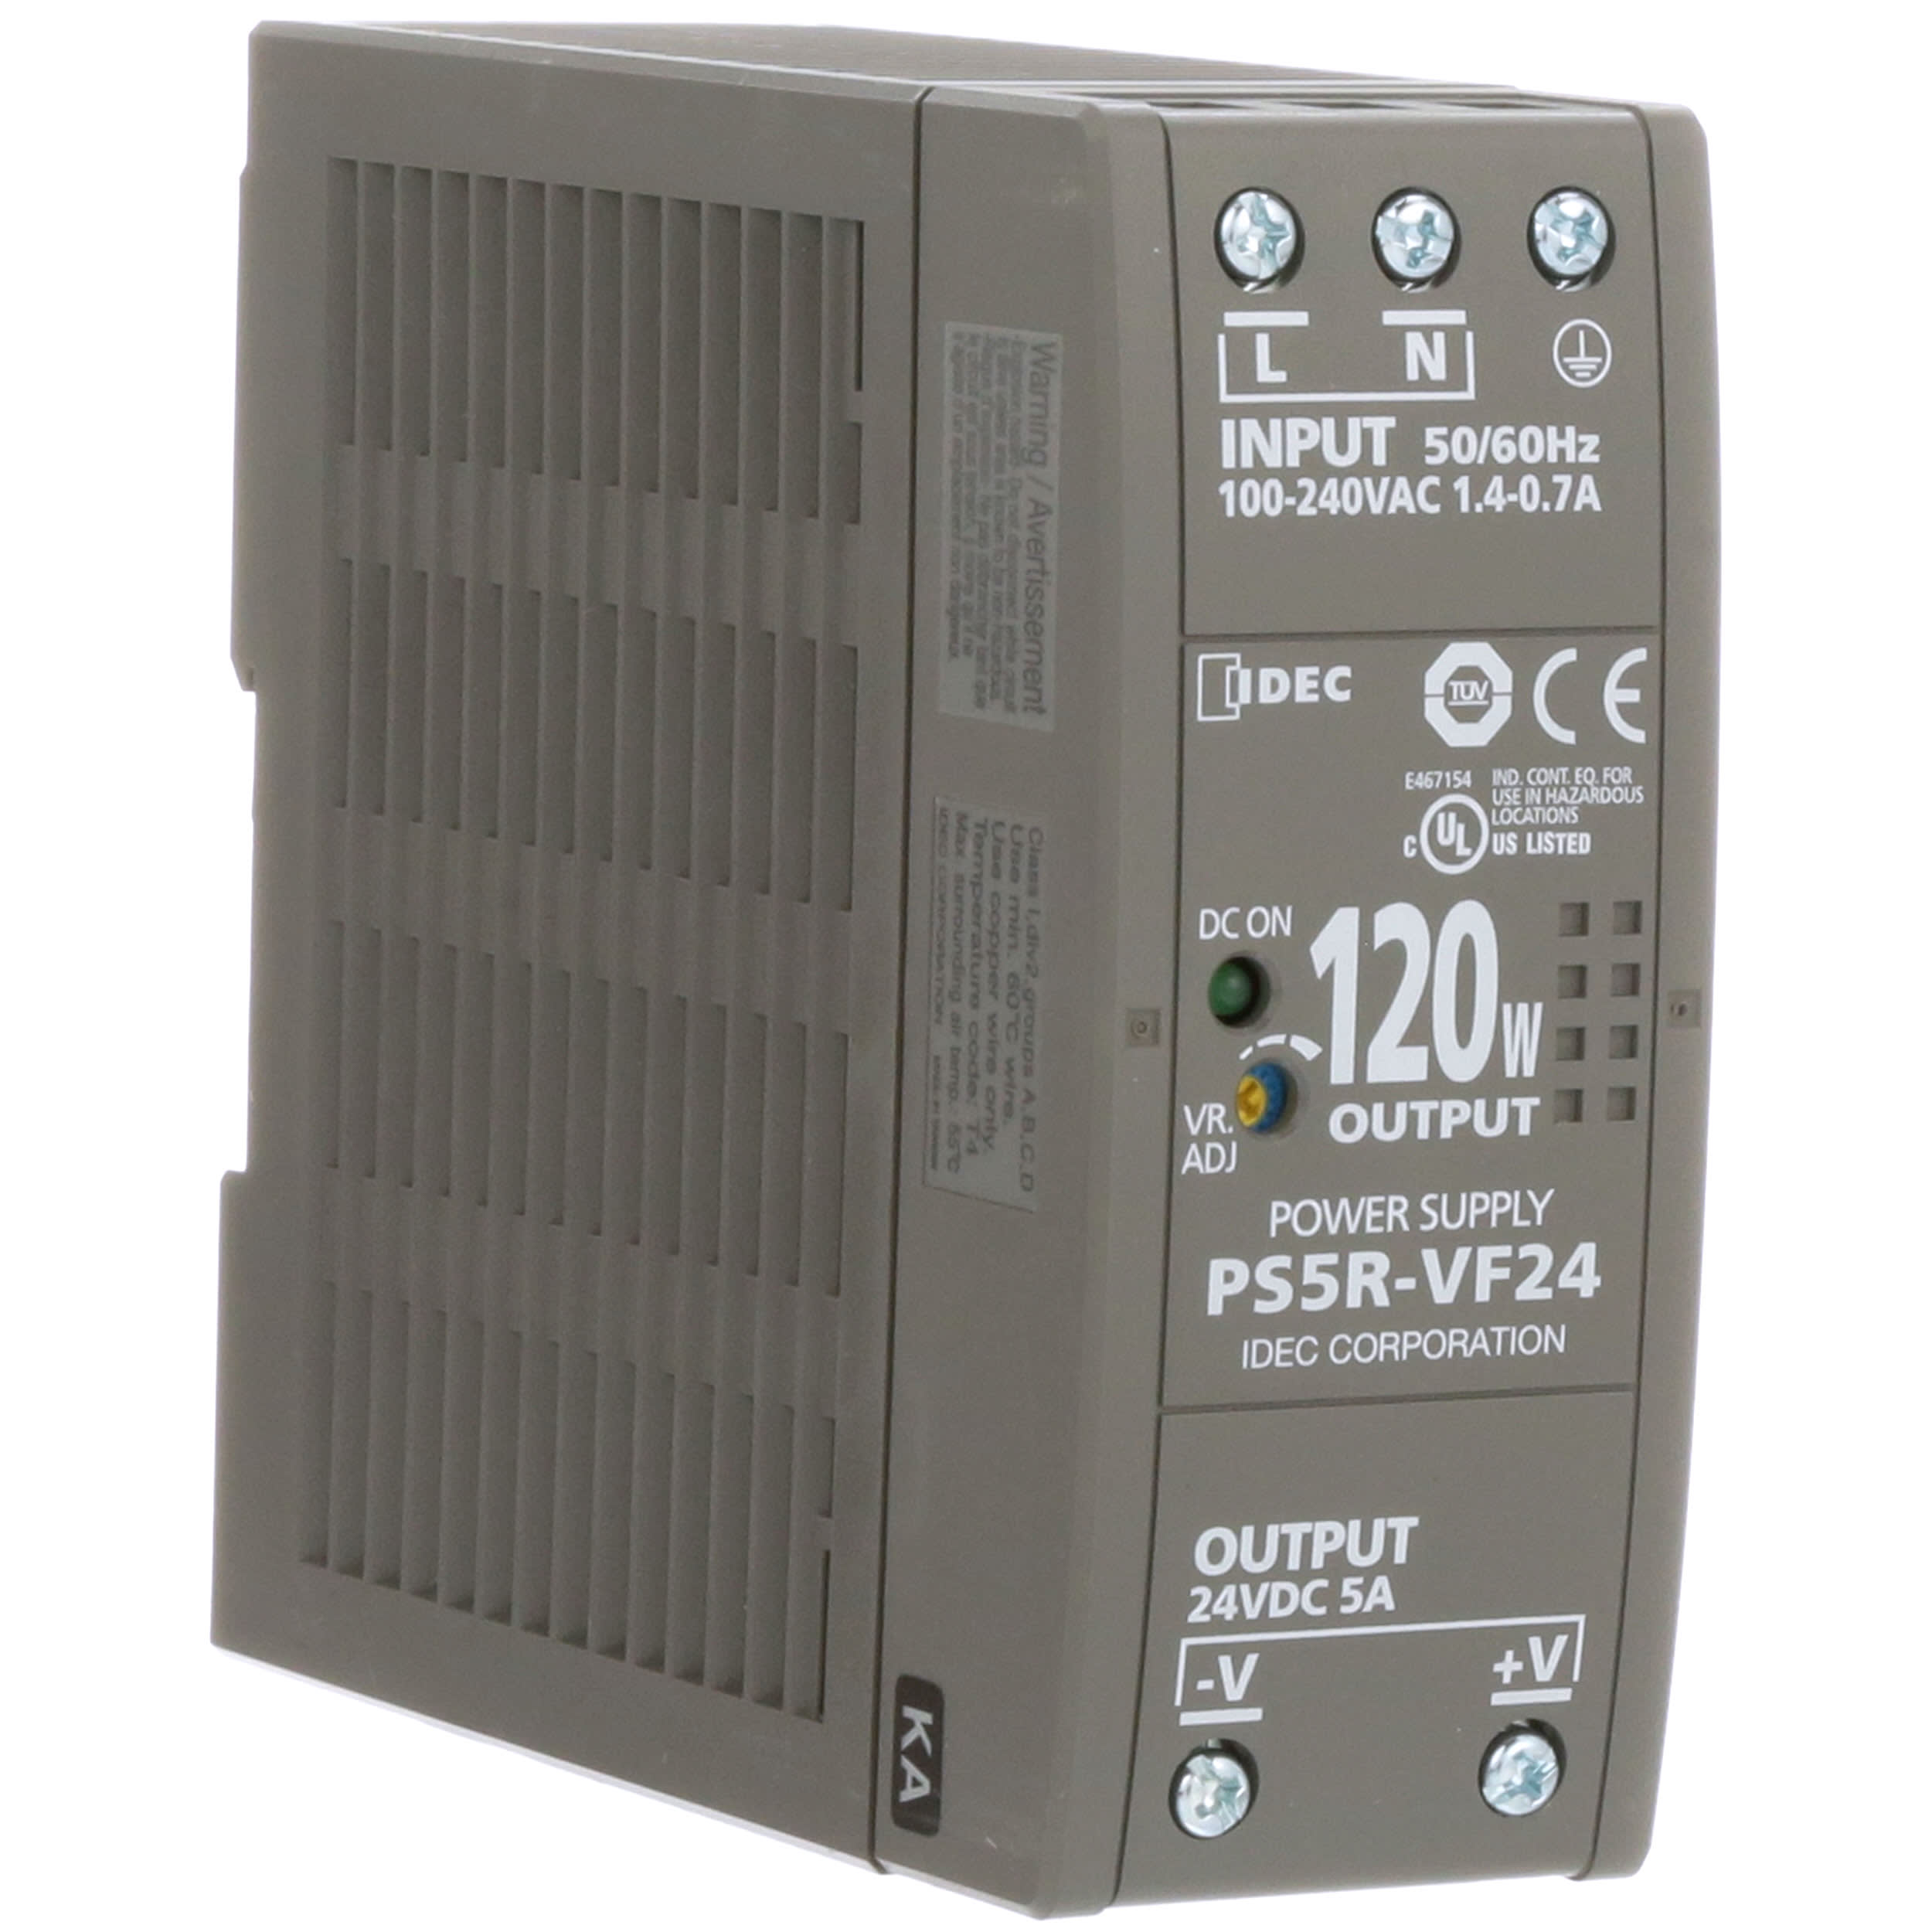 IDEC Ps5r-vf24 Power Supply 120w 24vdc DIN for sale online 